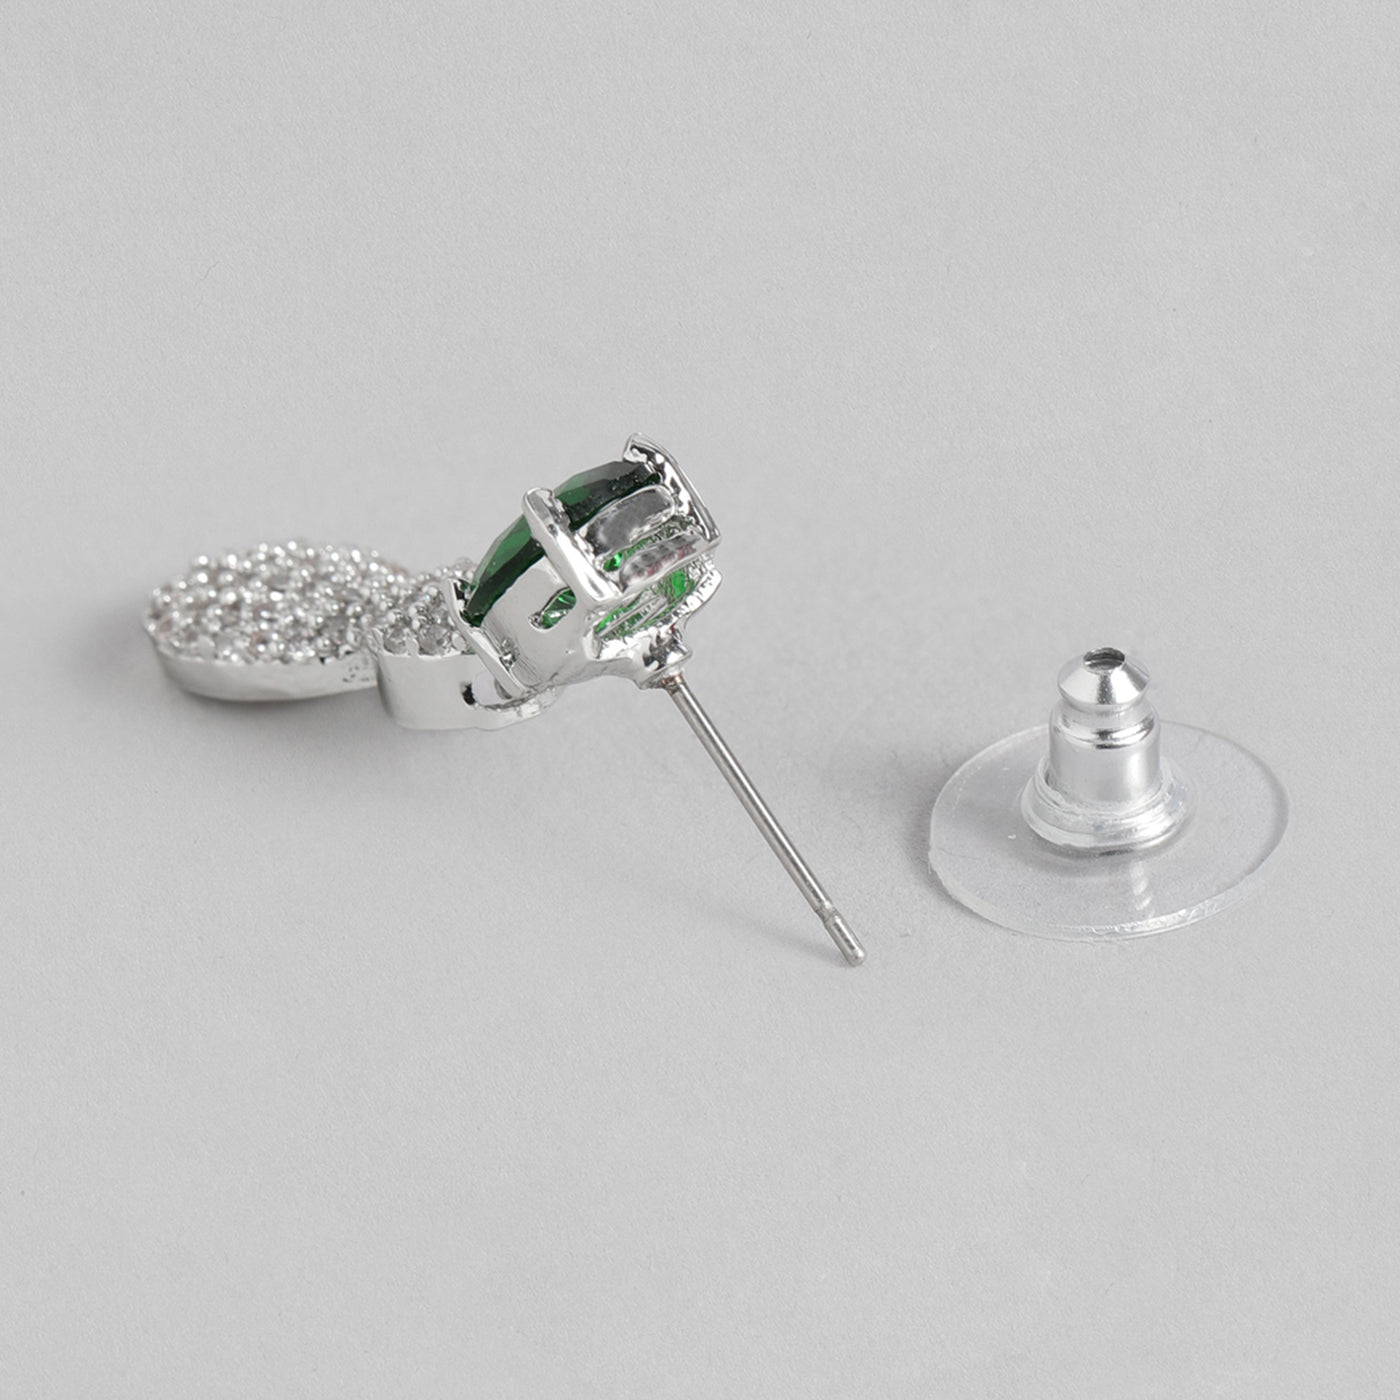 Estele Rhodium Plated CZ Drop Designer Necklace Set with Green Stones for Women